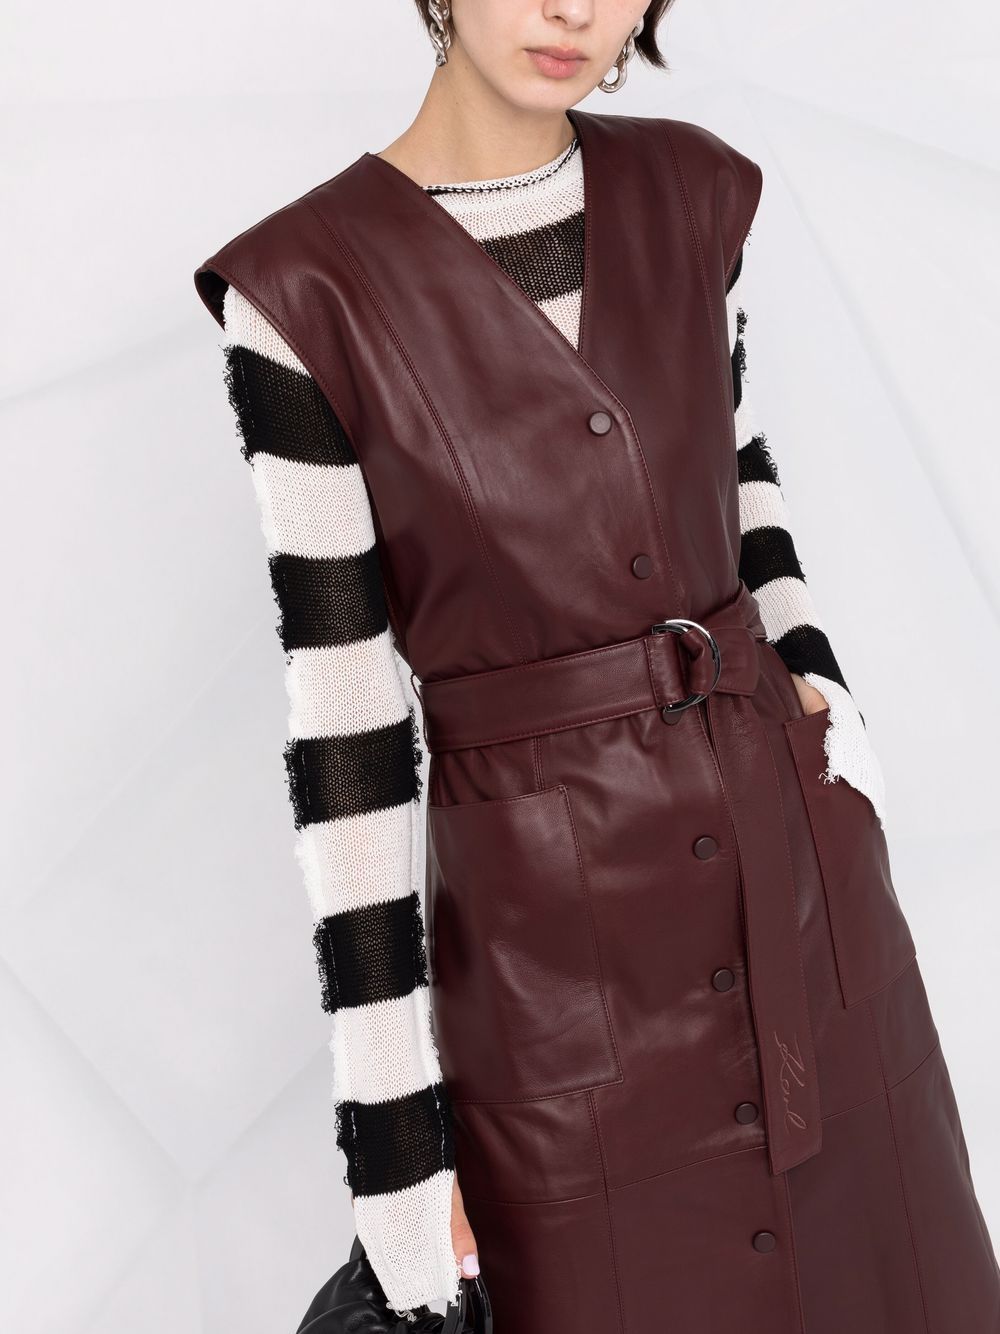 Karl Lagerfeld Sleeveless Leather Dress - Farfetch